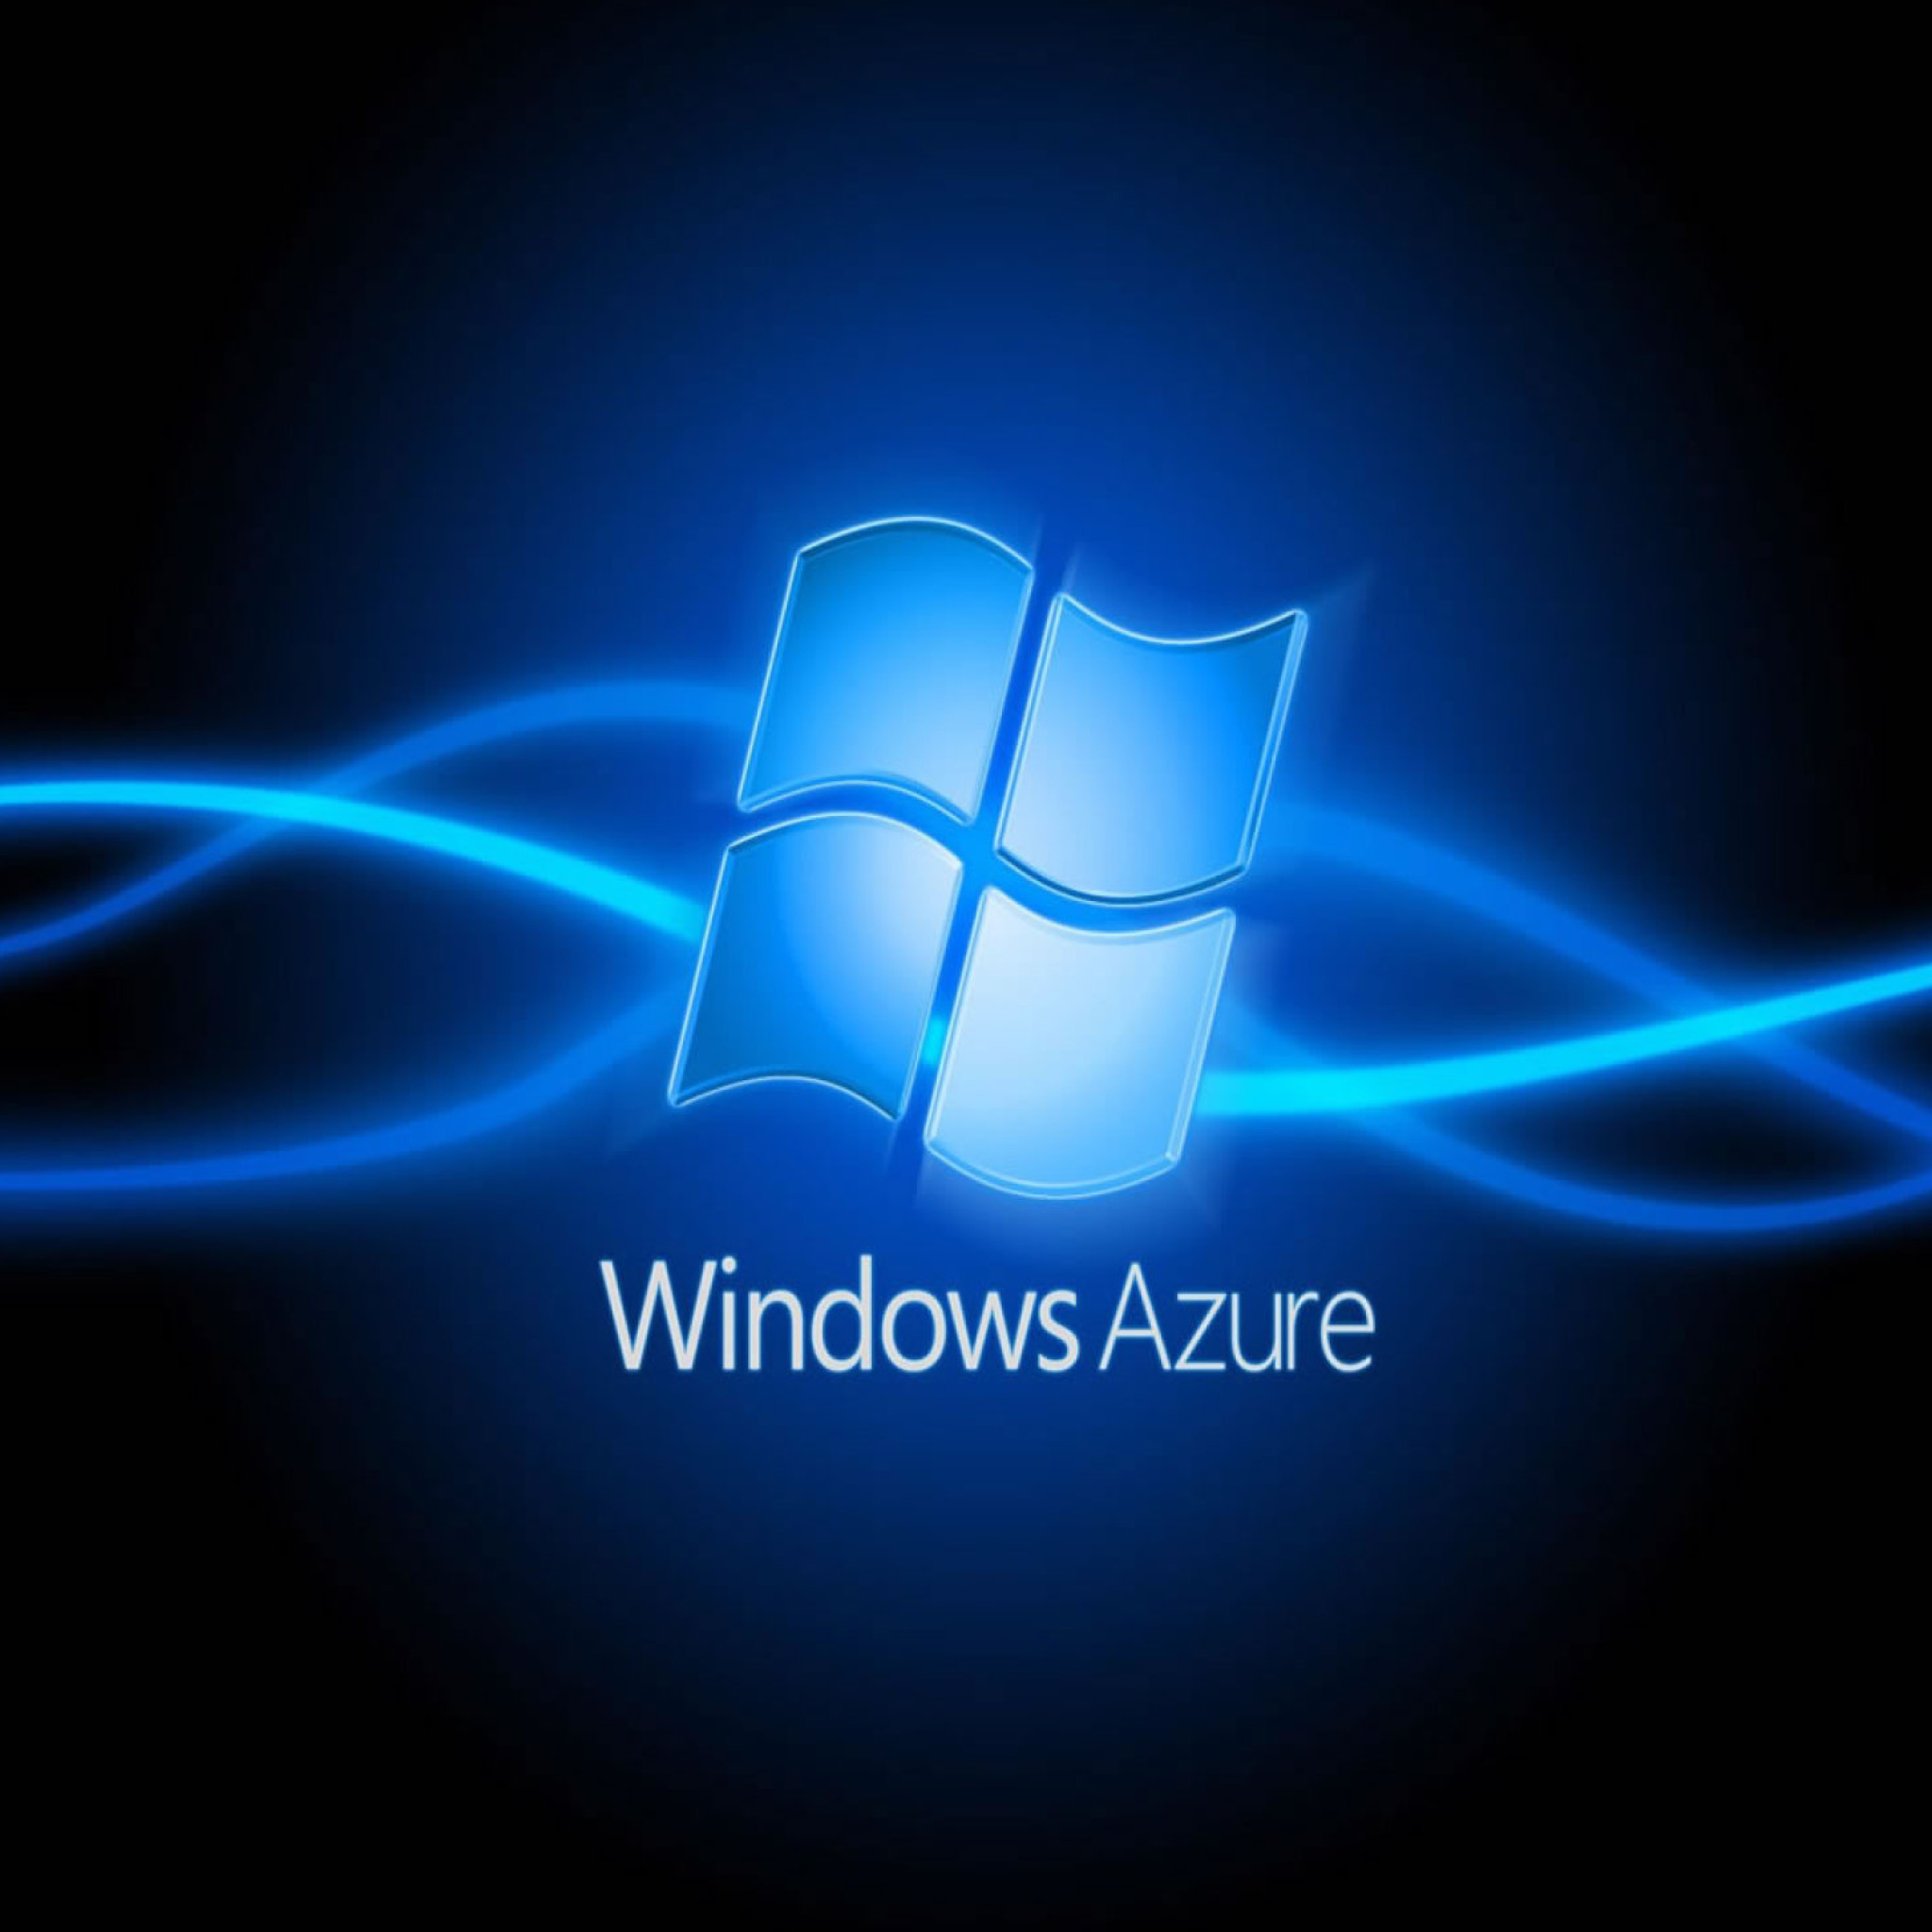 Windows Azure Xtreme wallpaper 2048x2048